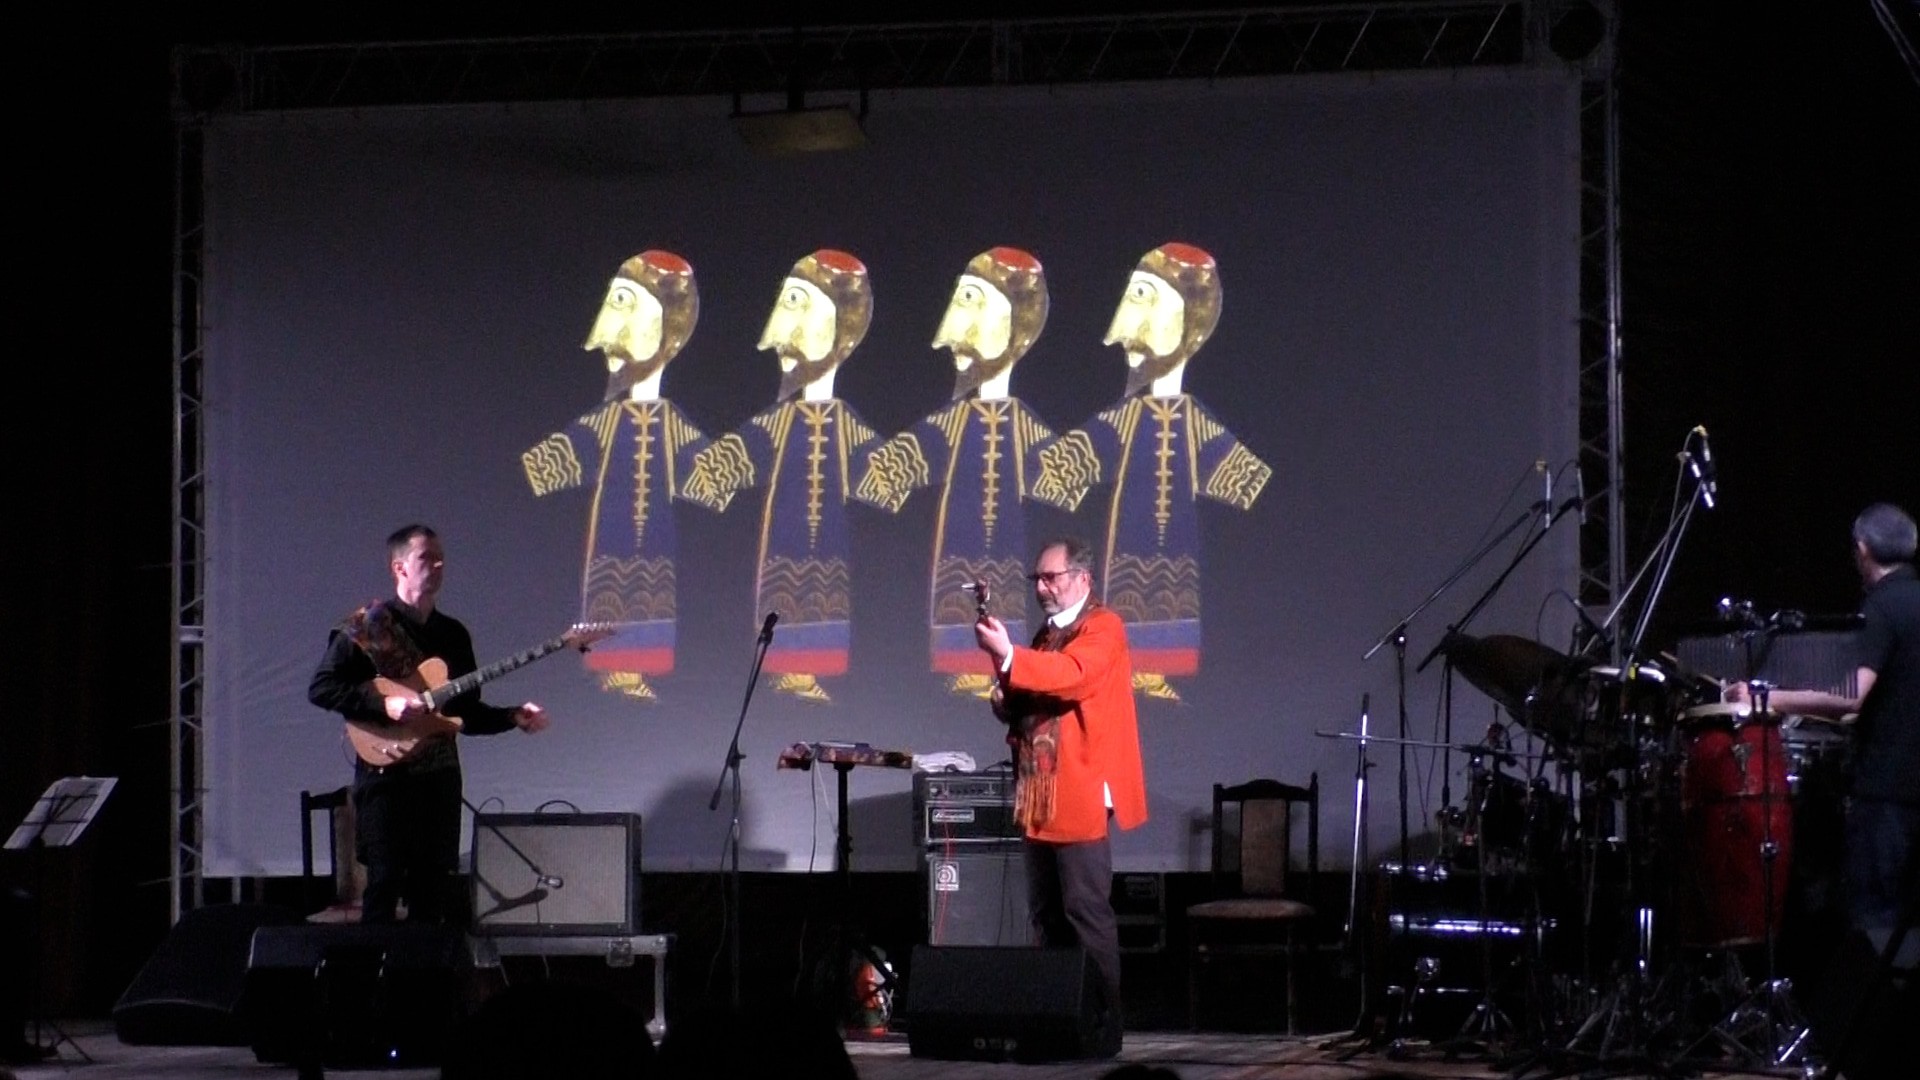 Выступление на фестивале в Дербенте. Скриншот с видео "Кавказского узла" https://www.youtube.com/watch?v=mkfYbe34mJQ